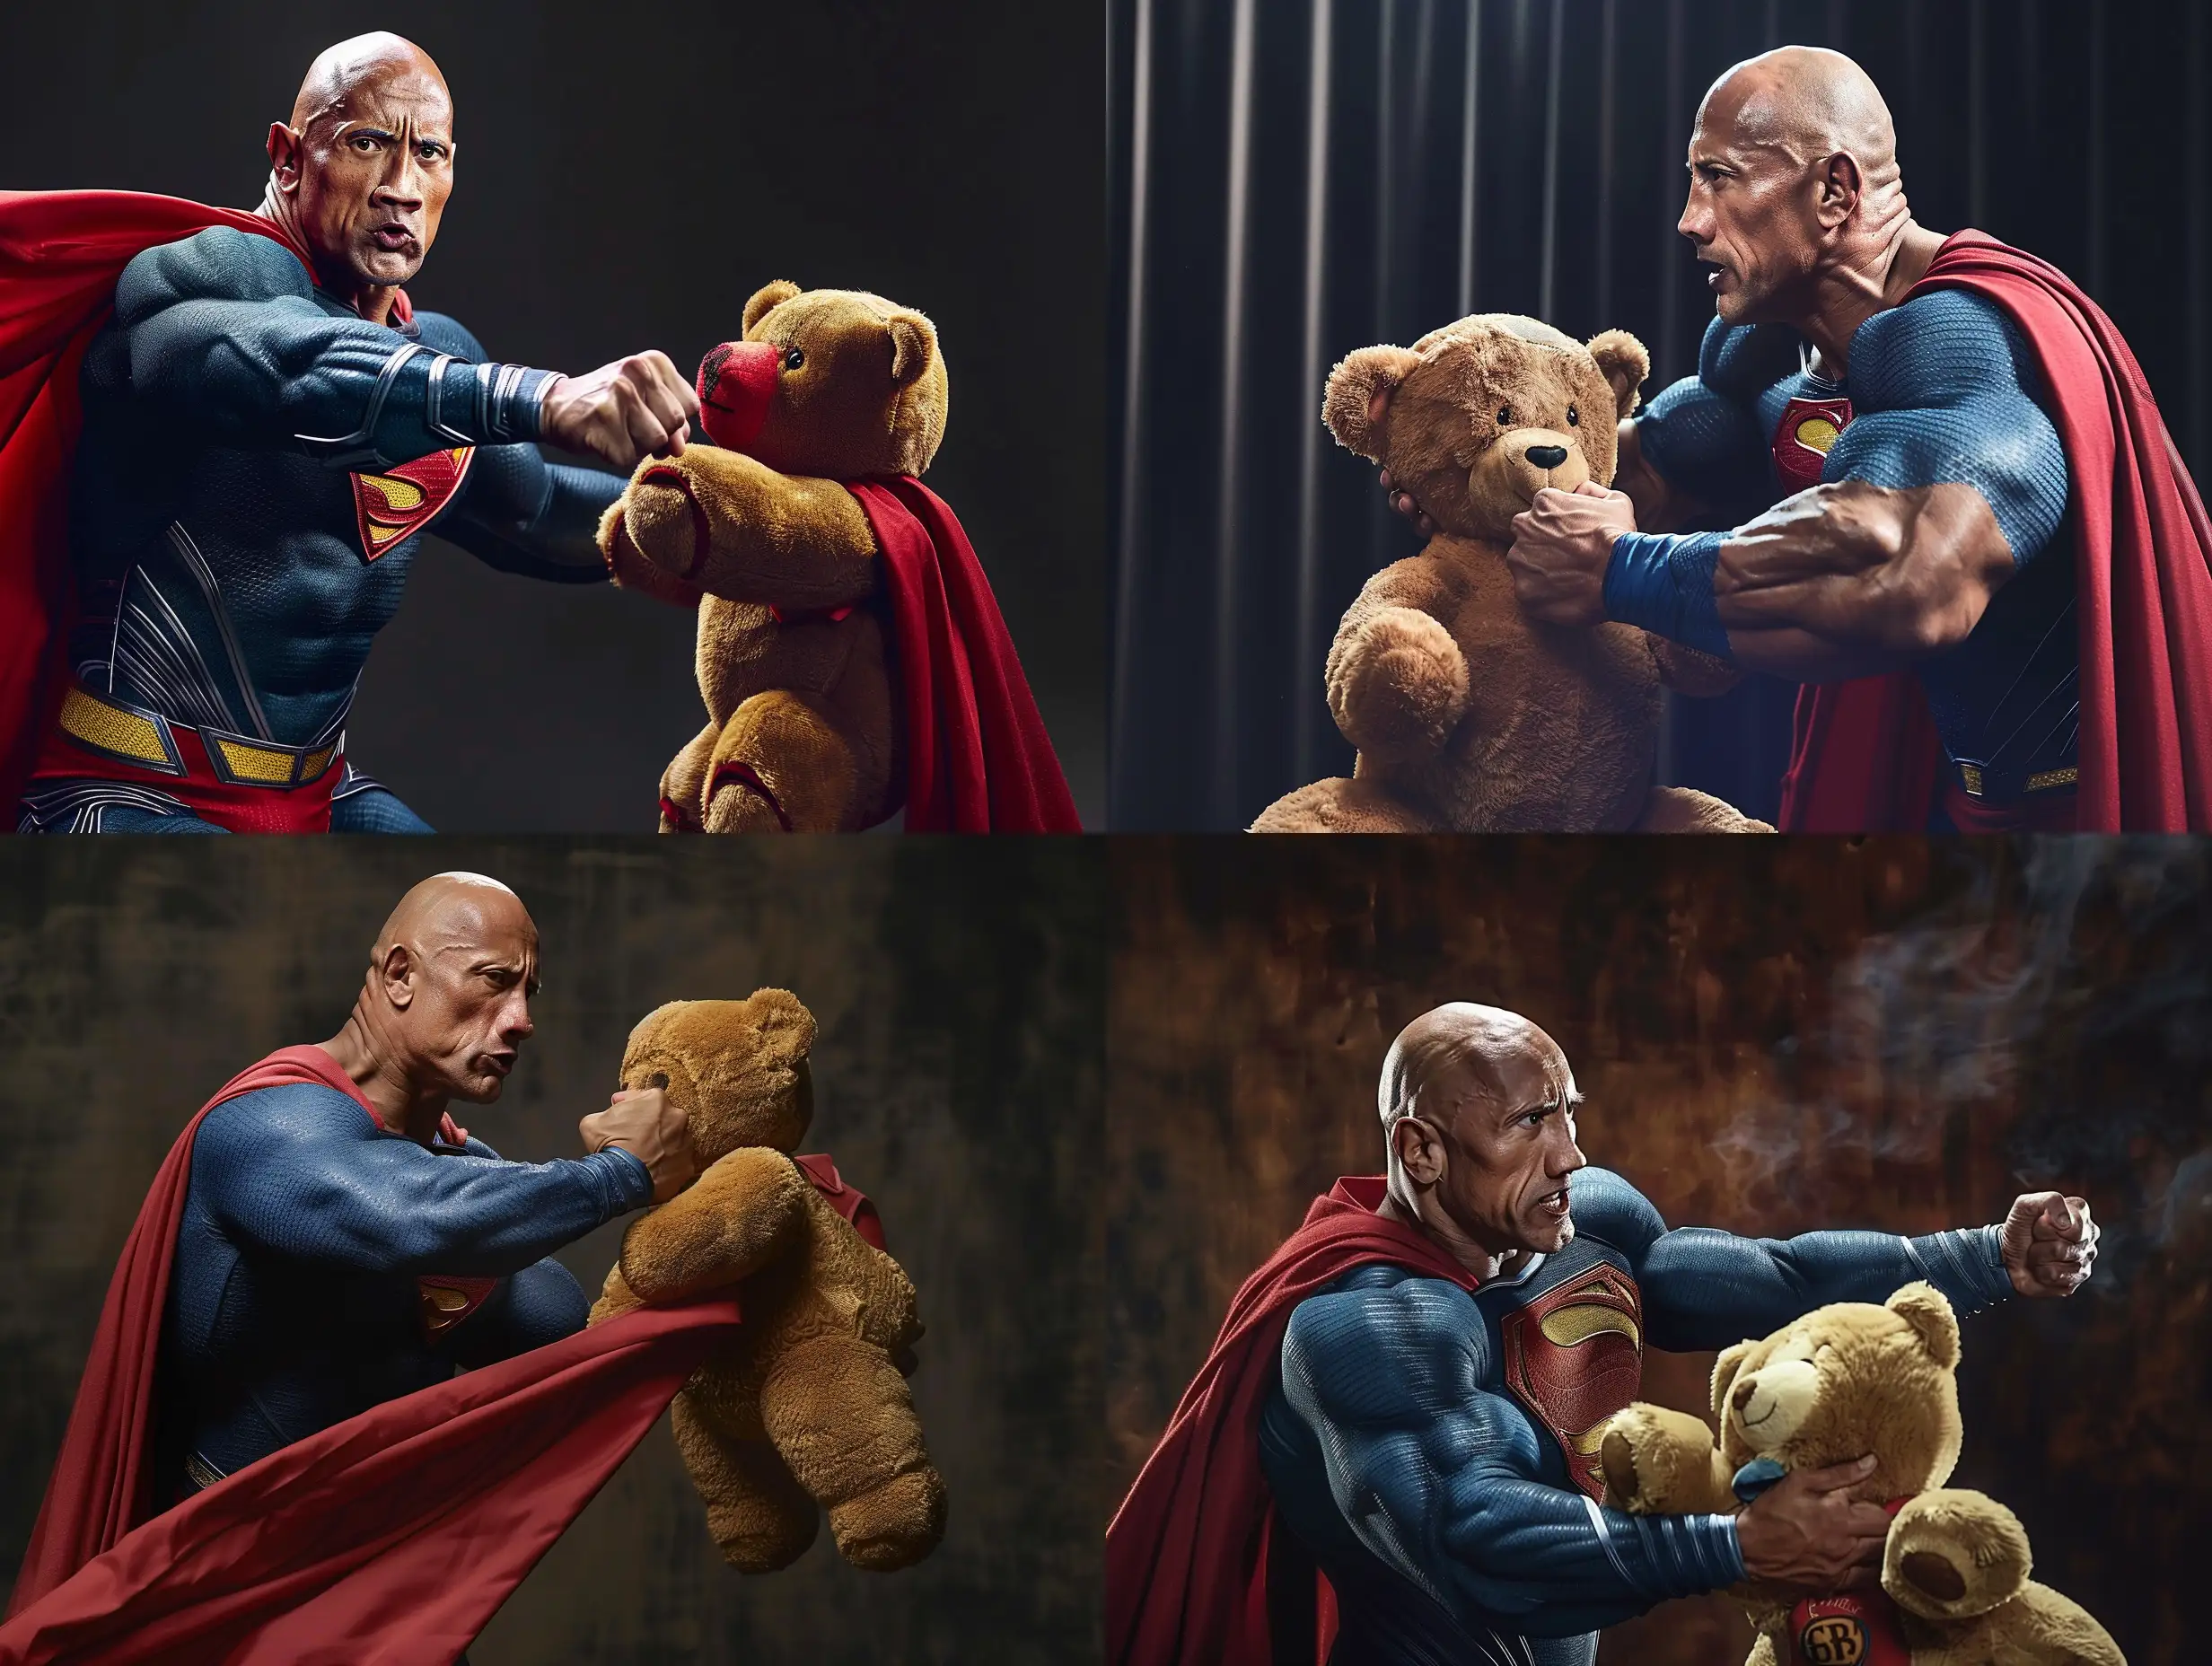 Dwayne-The-Rock-Johnson-as-Superman-Punching-a-Teddy-Bear